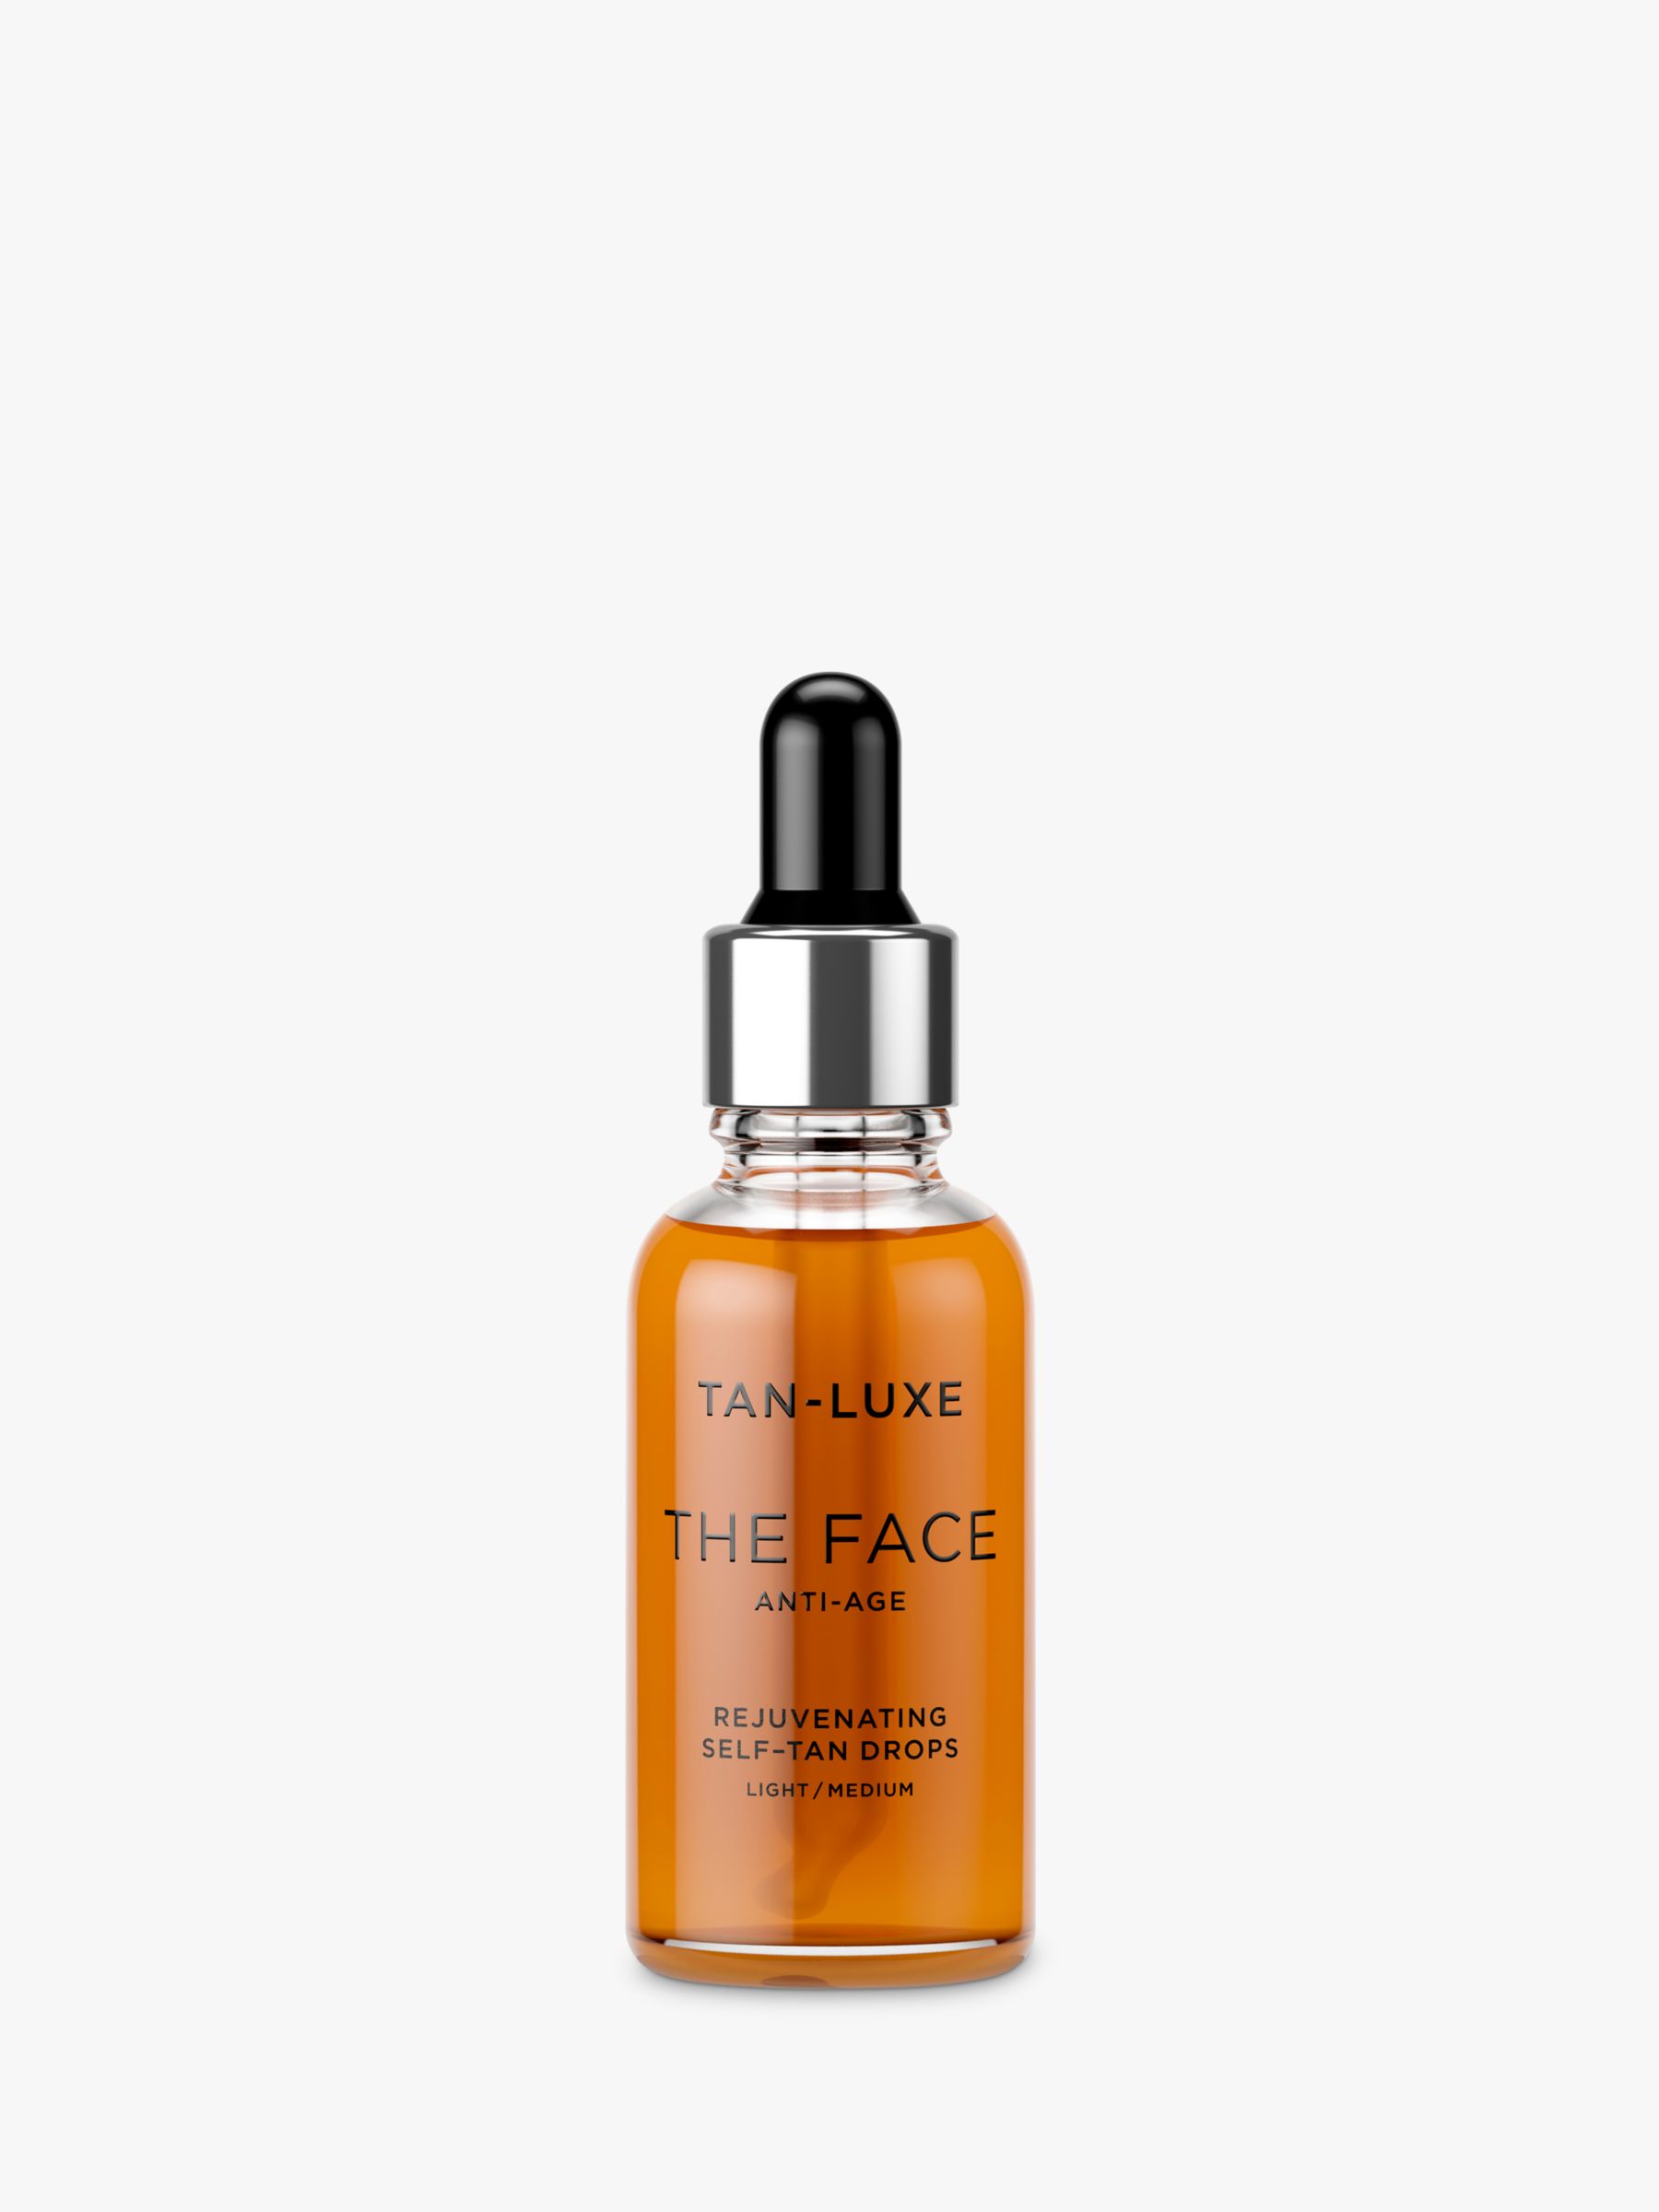 Tan-Luxe The Face Anti-Age Rejuvenating Self-Tan Drops, Light/Medium 1